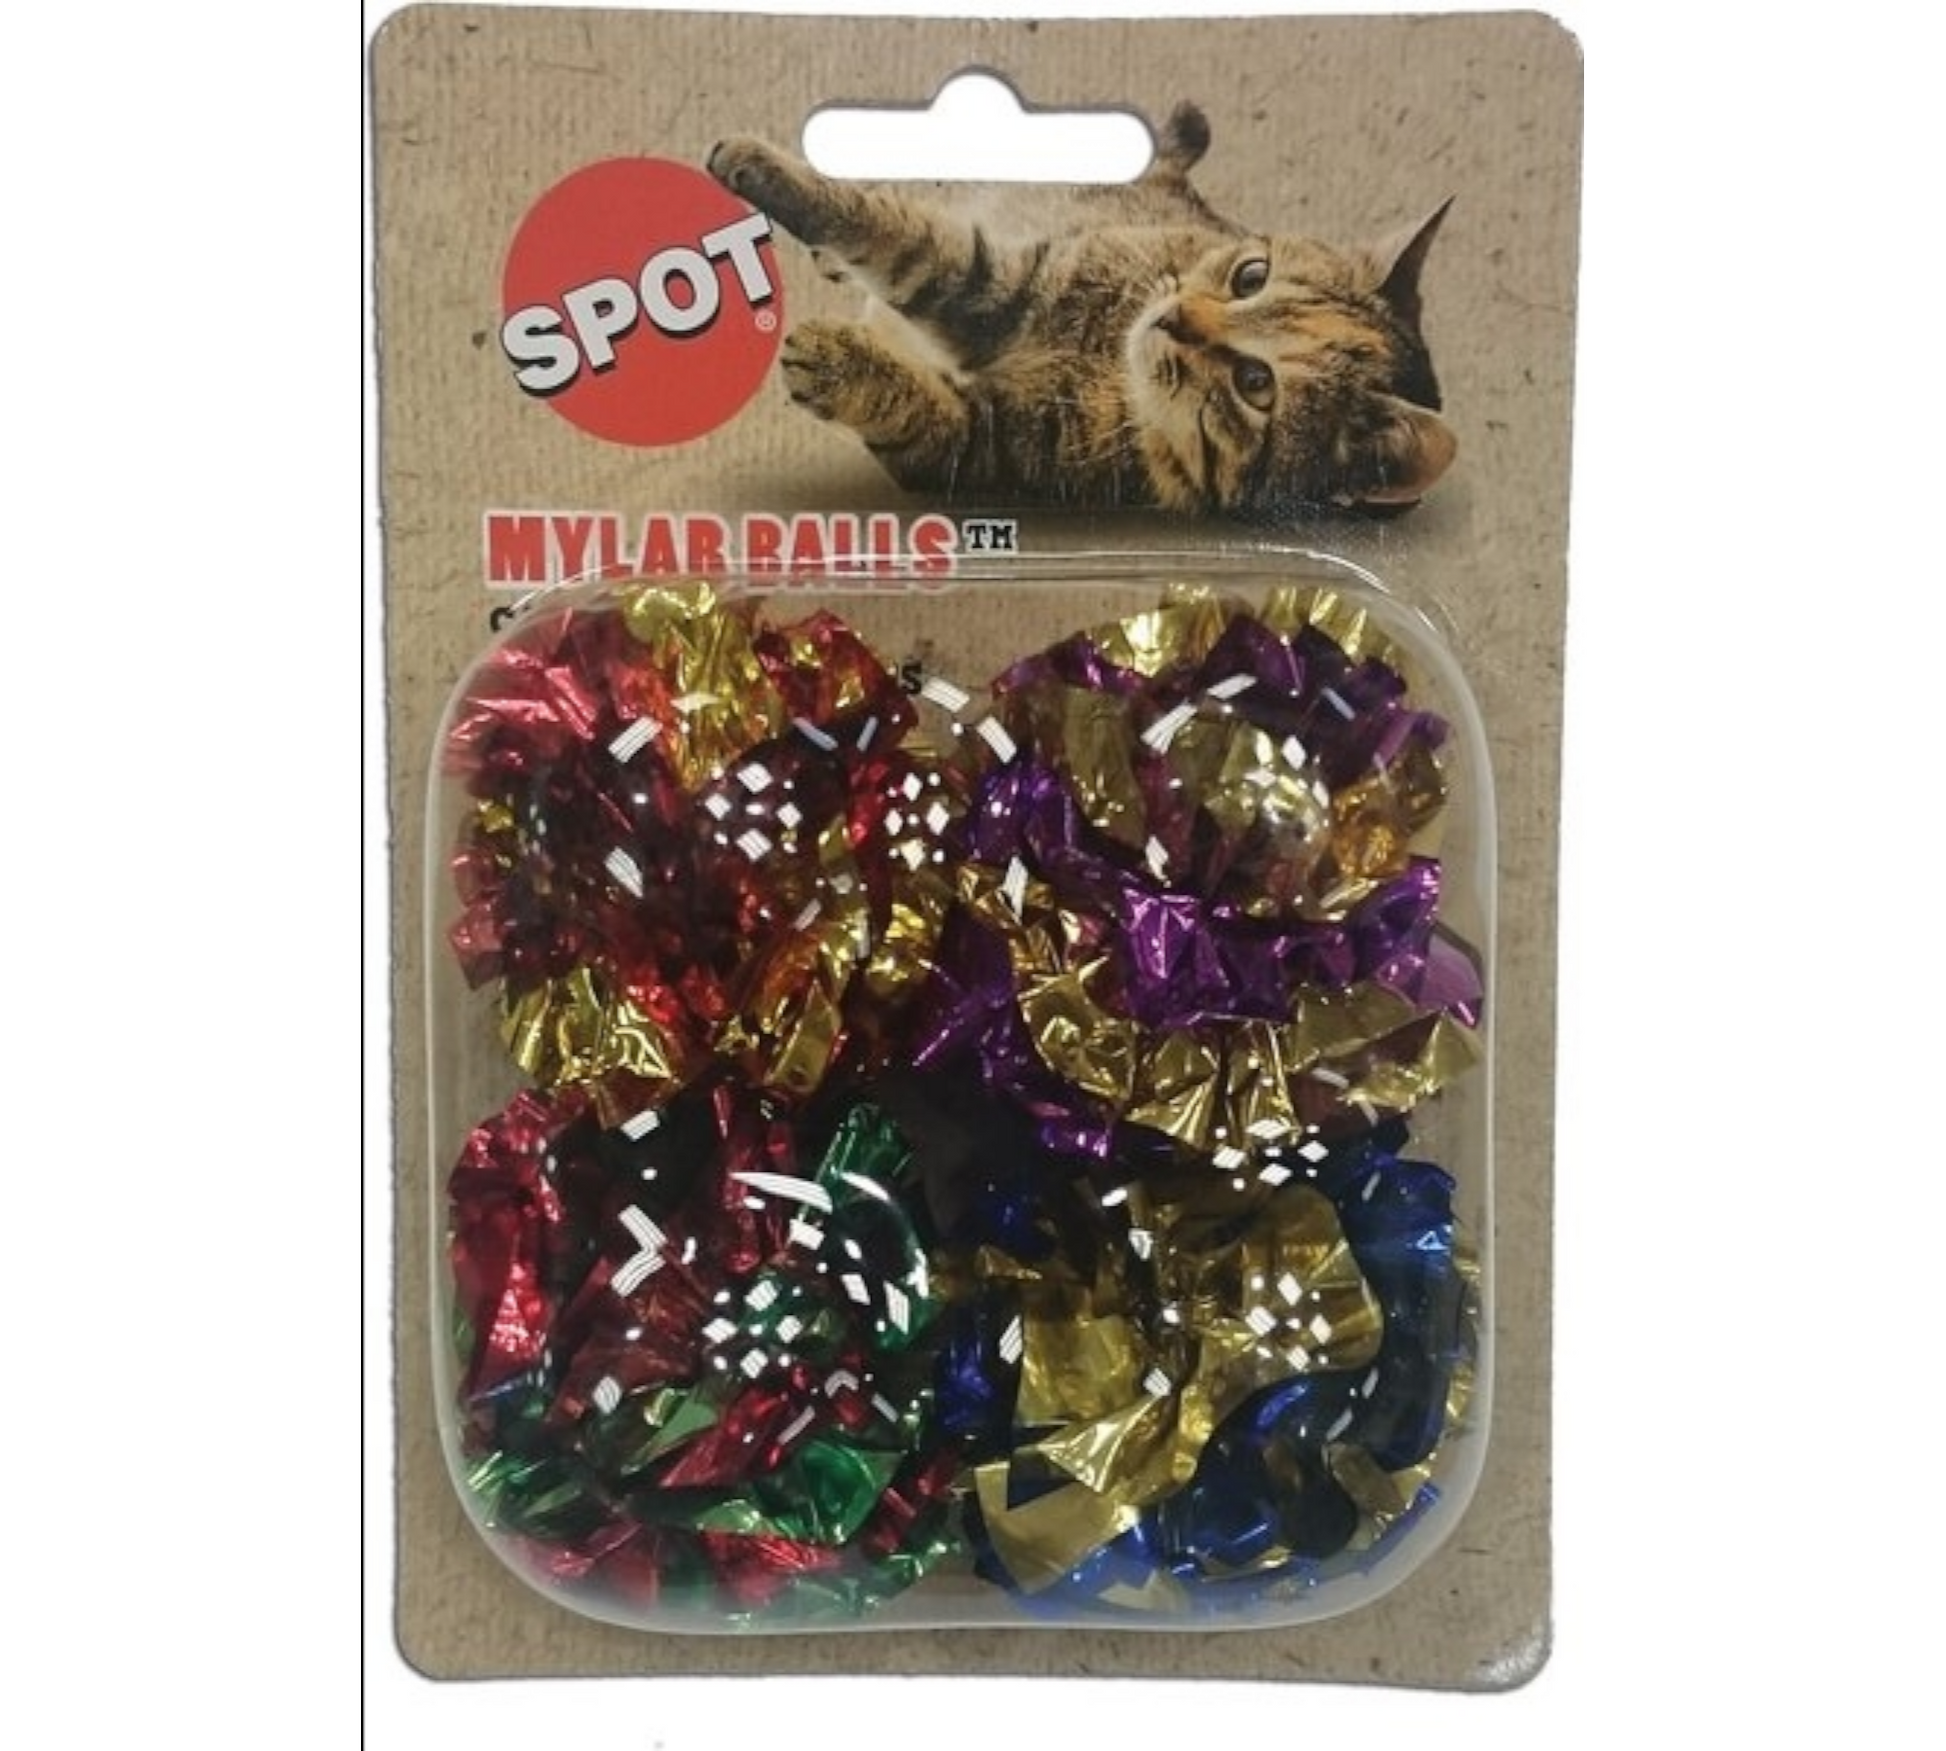 Canine's World Cat Balls & Chaser Toys Spot Pet Mylar Balls Cat Toy, 1.5-in, 4 pack Spot